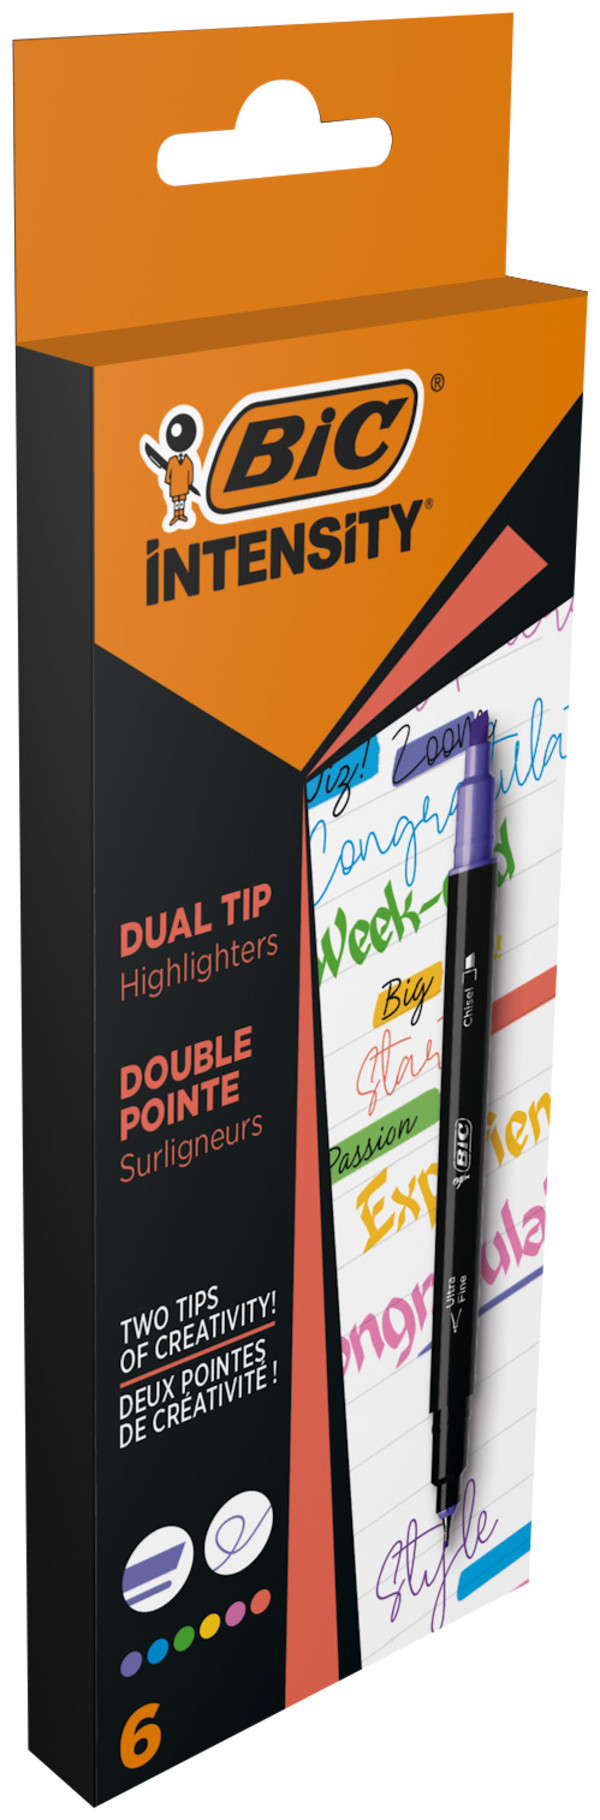 Zakreślacz bic intensity dual tip highlighter 6 kolorów